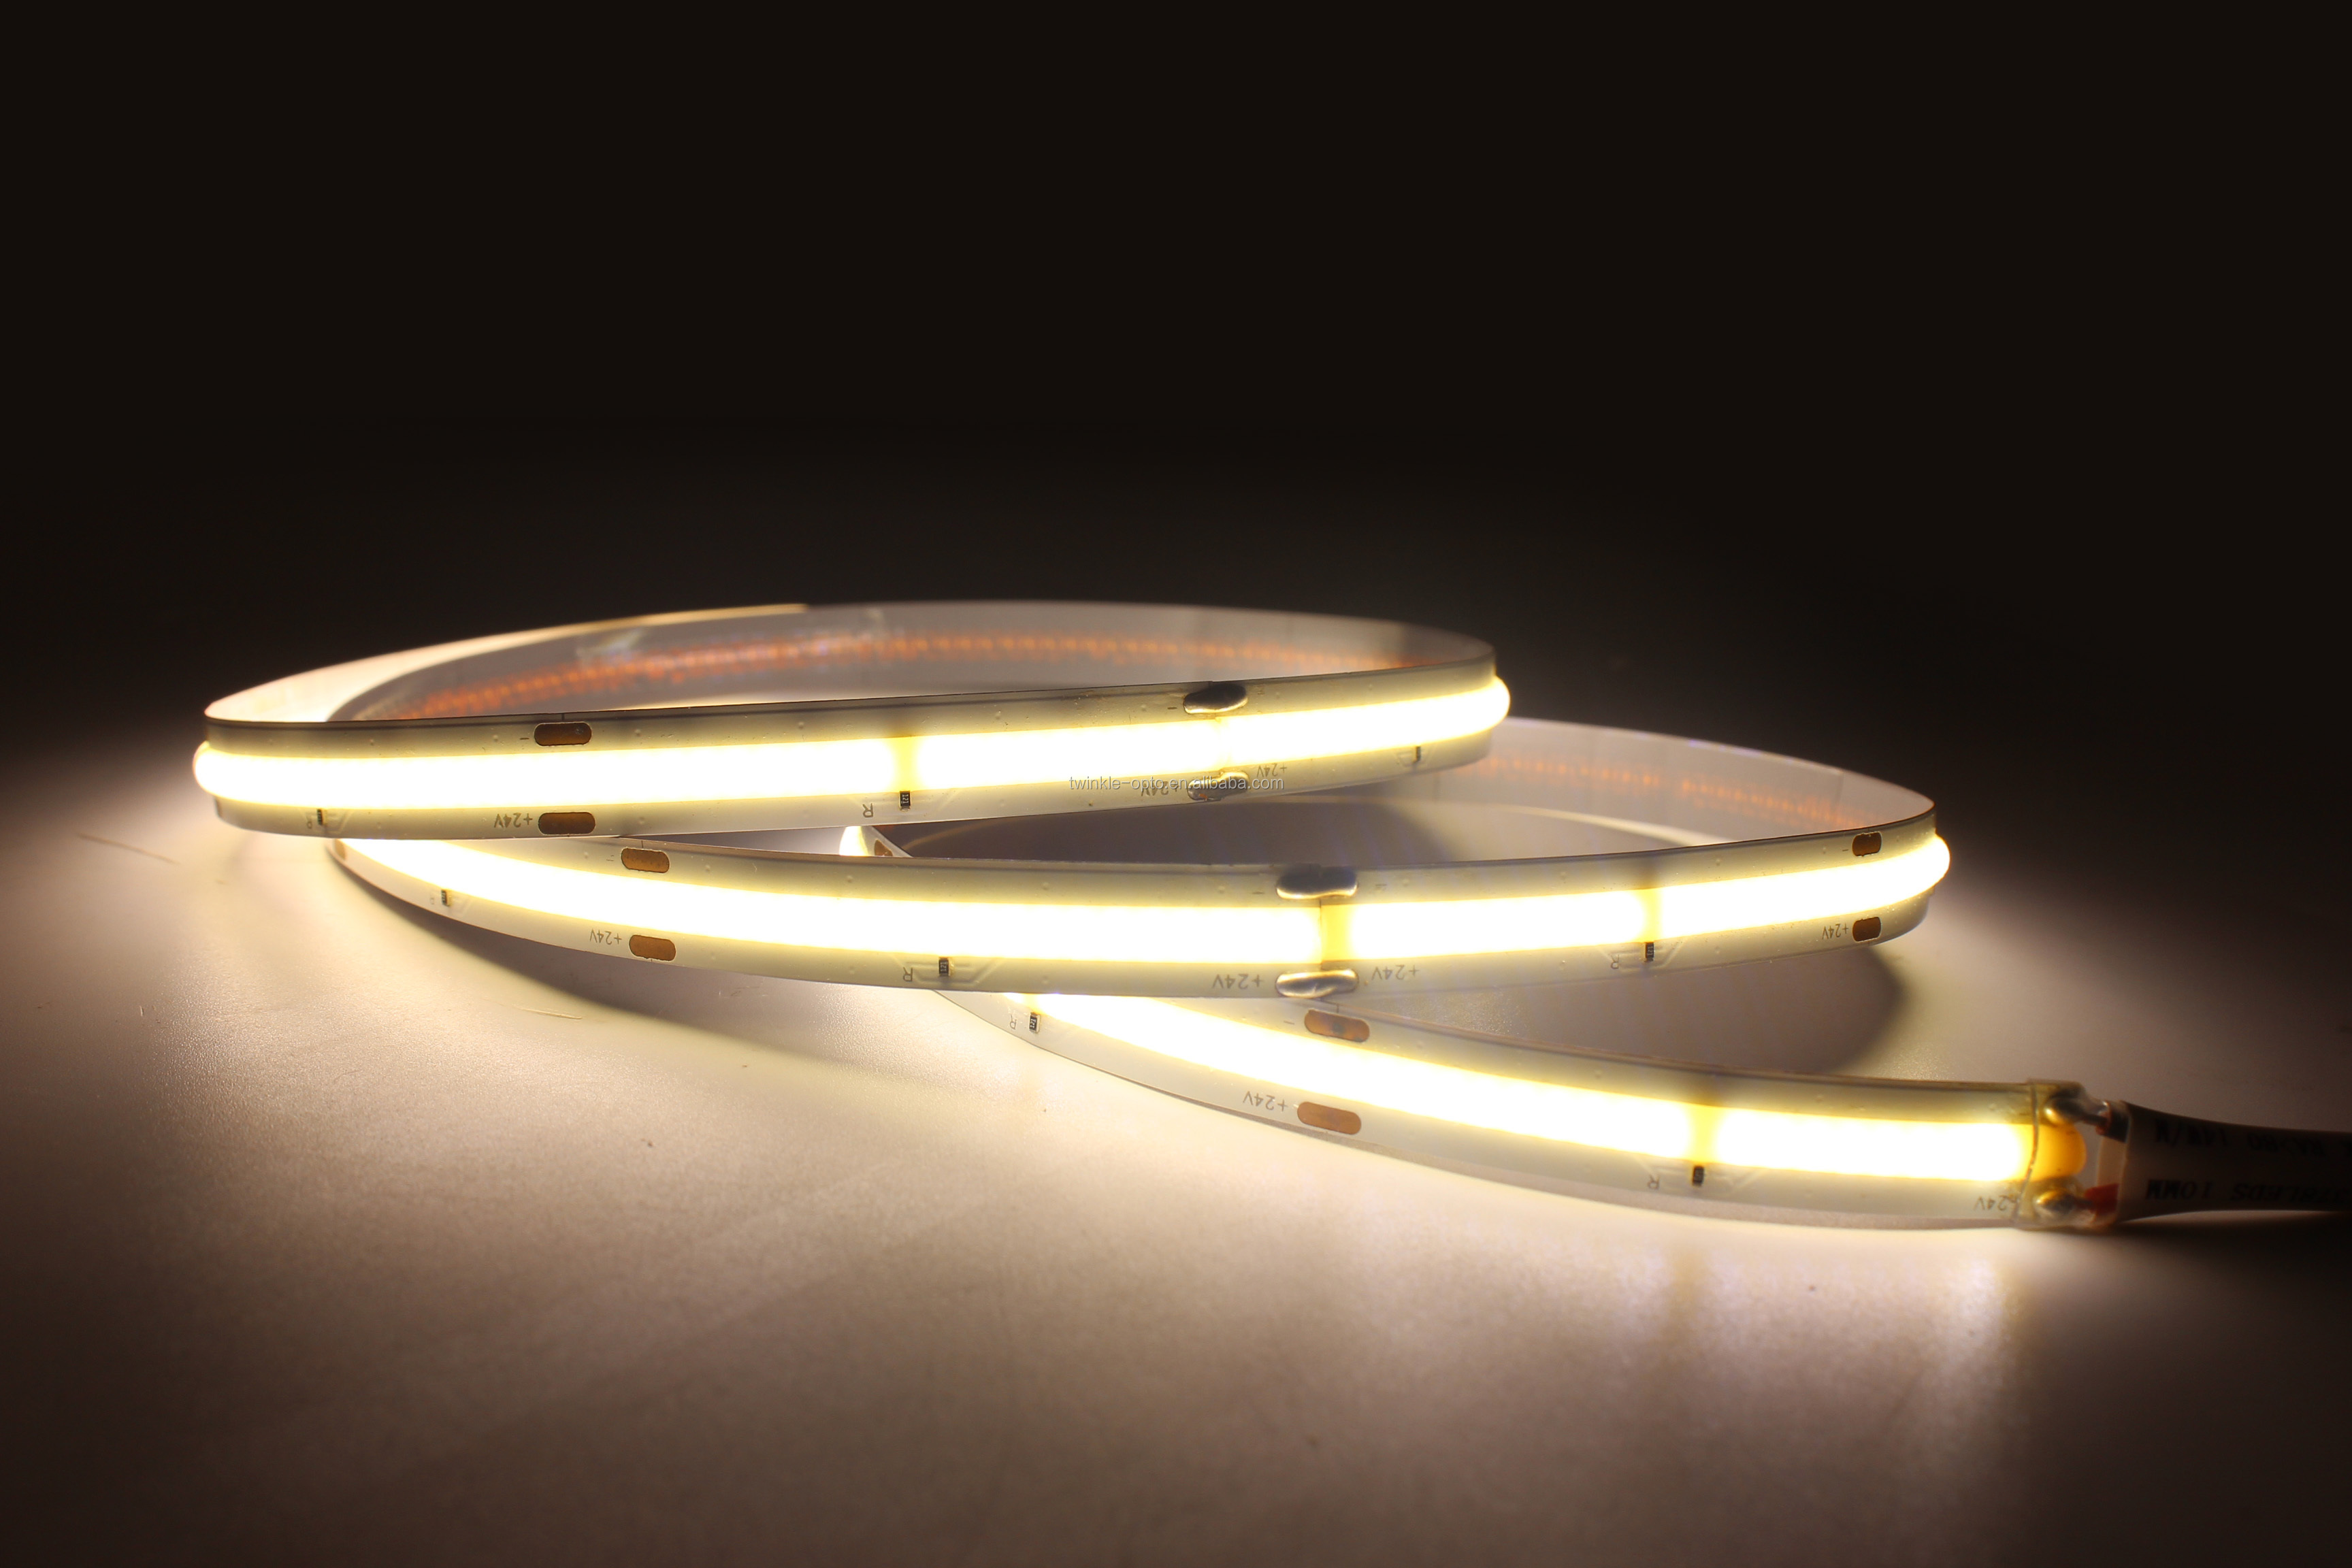 New Model High Density uniform illumination Flexible COB LED Strip light for decorate